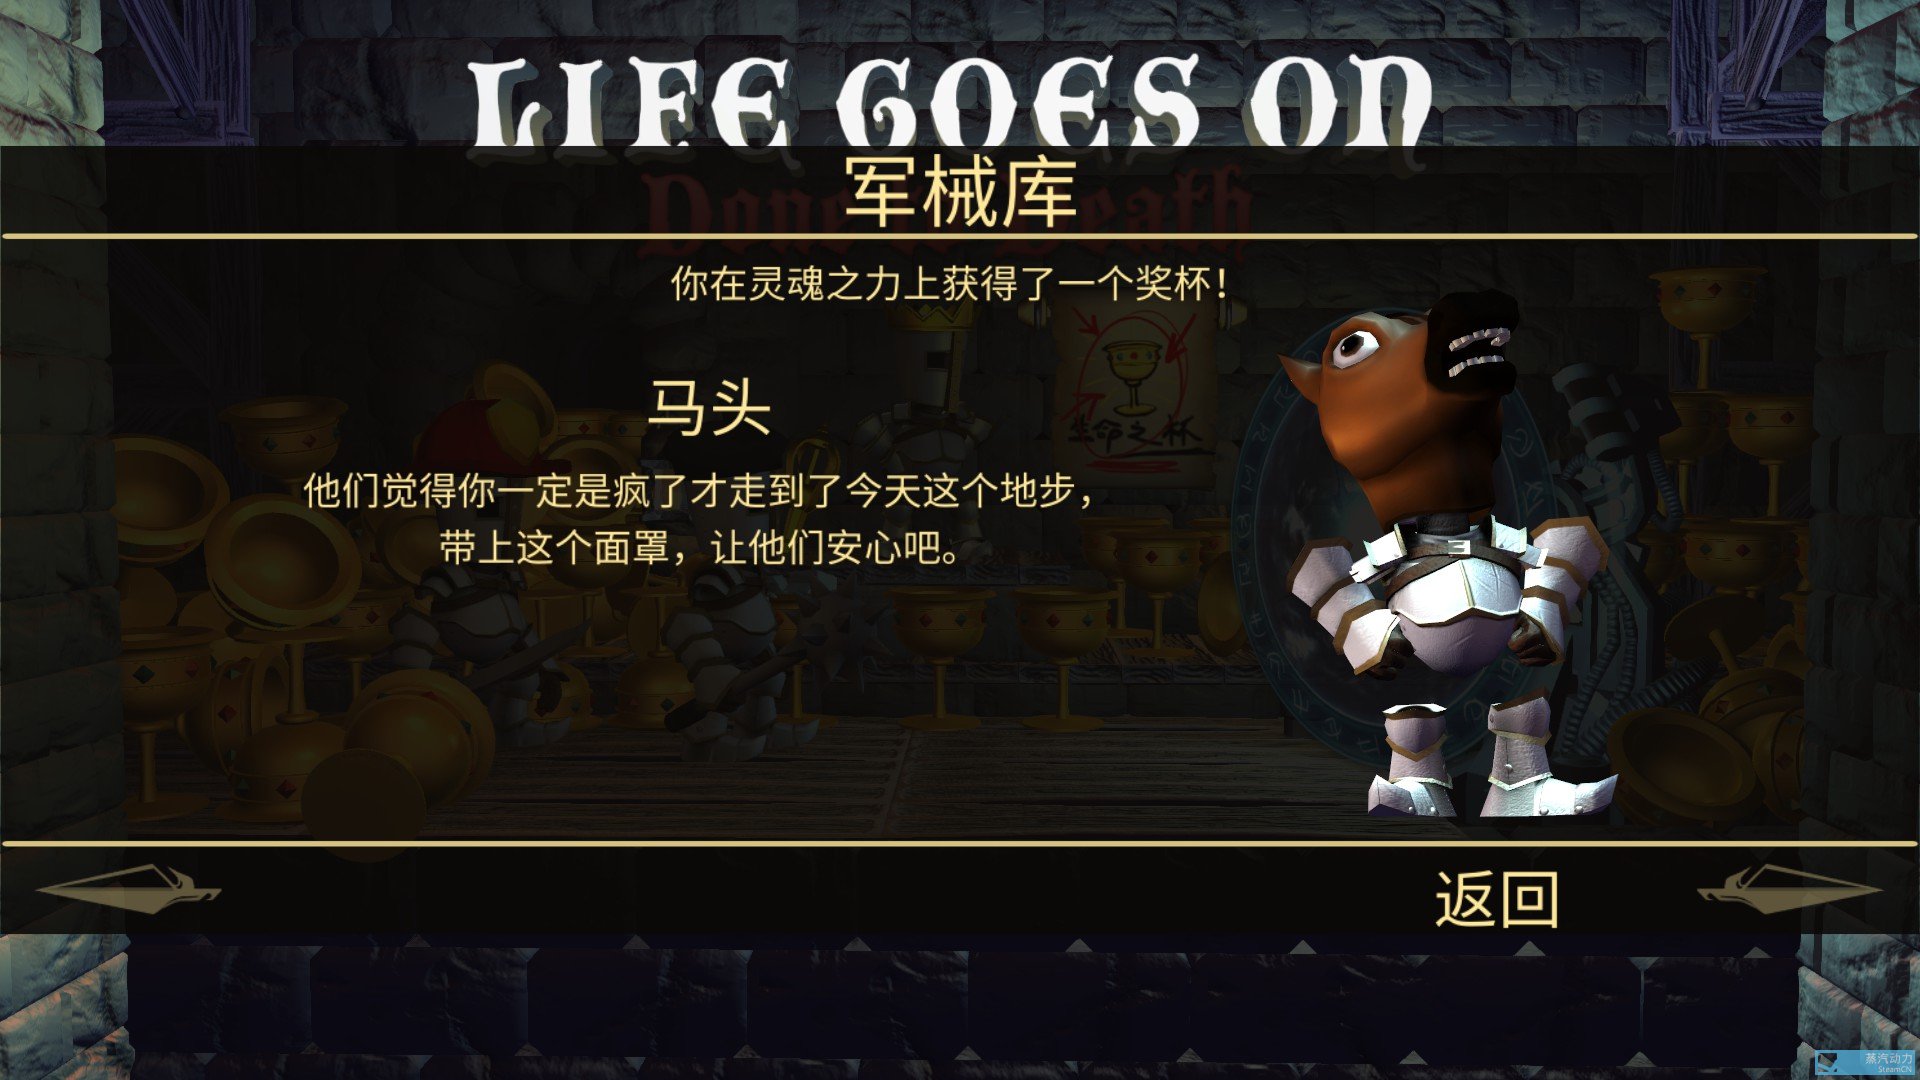 Life Goes On Done To Death短评横板过关游戏中的一股清流 游戏互鉴 其乐keylol 驱动正版游戏的引擎